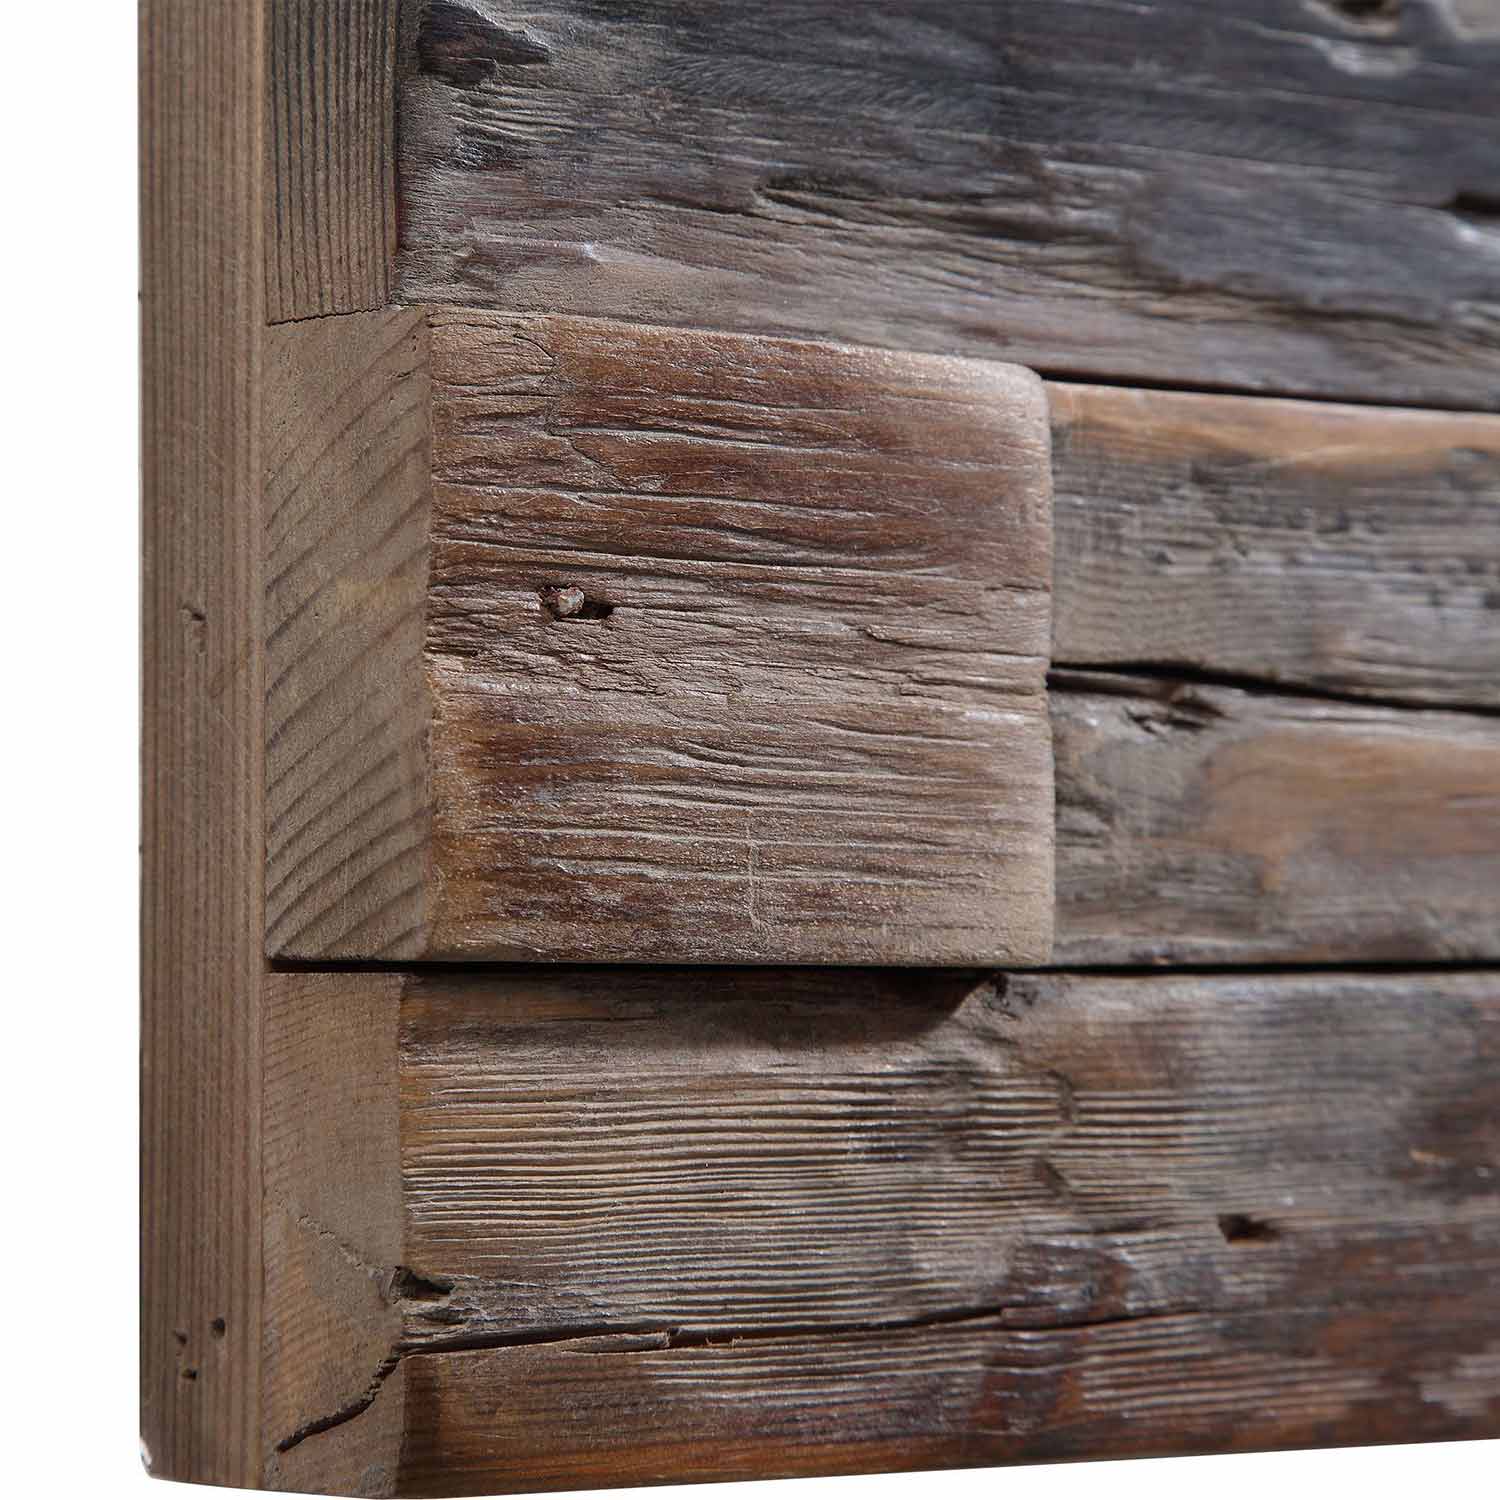 Uttermost Astern Wood Wall Decor - Set of 2